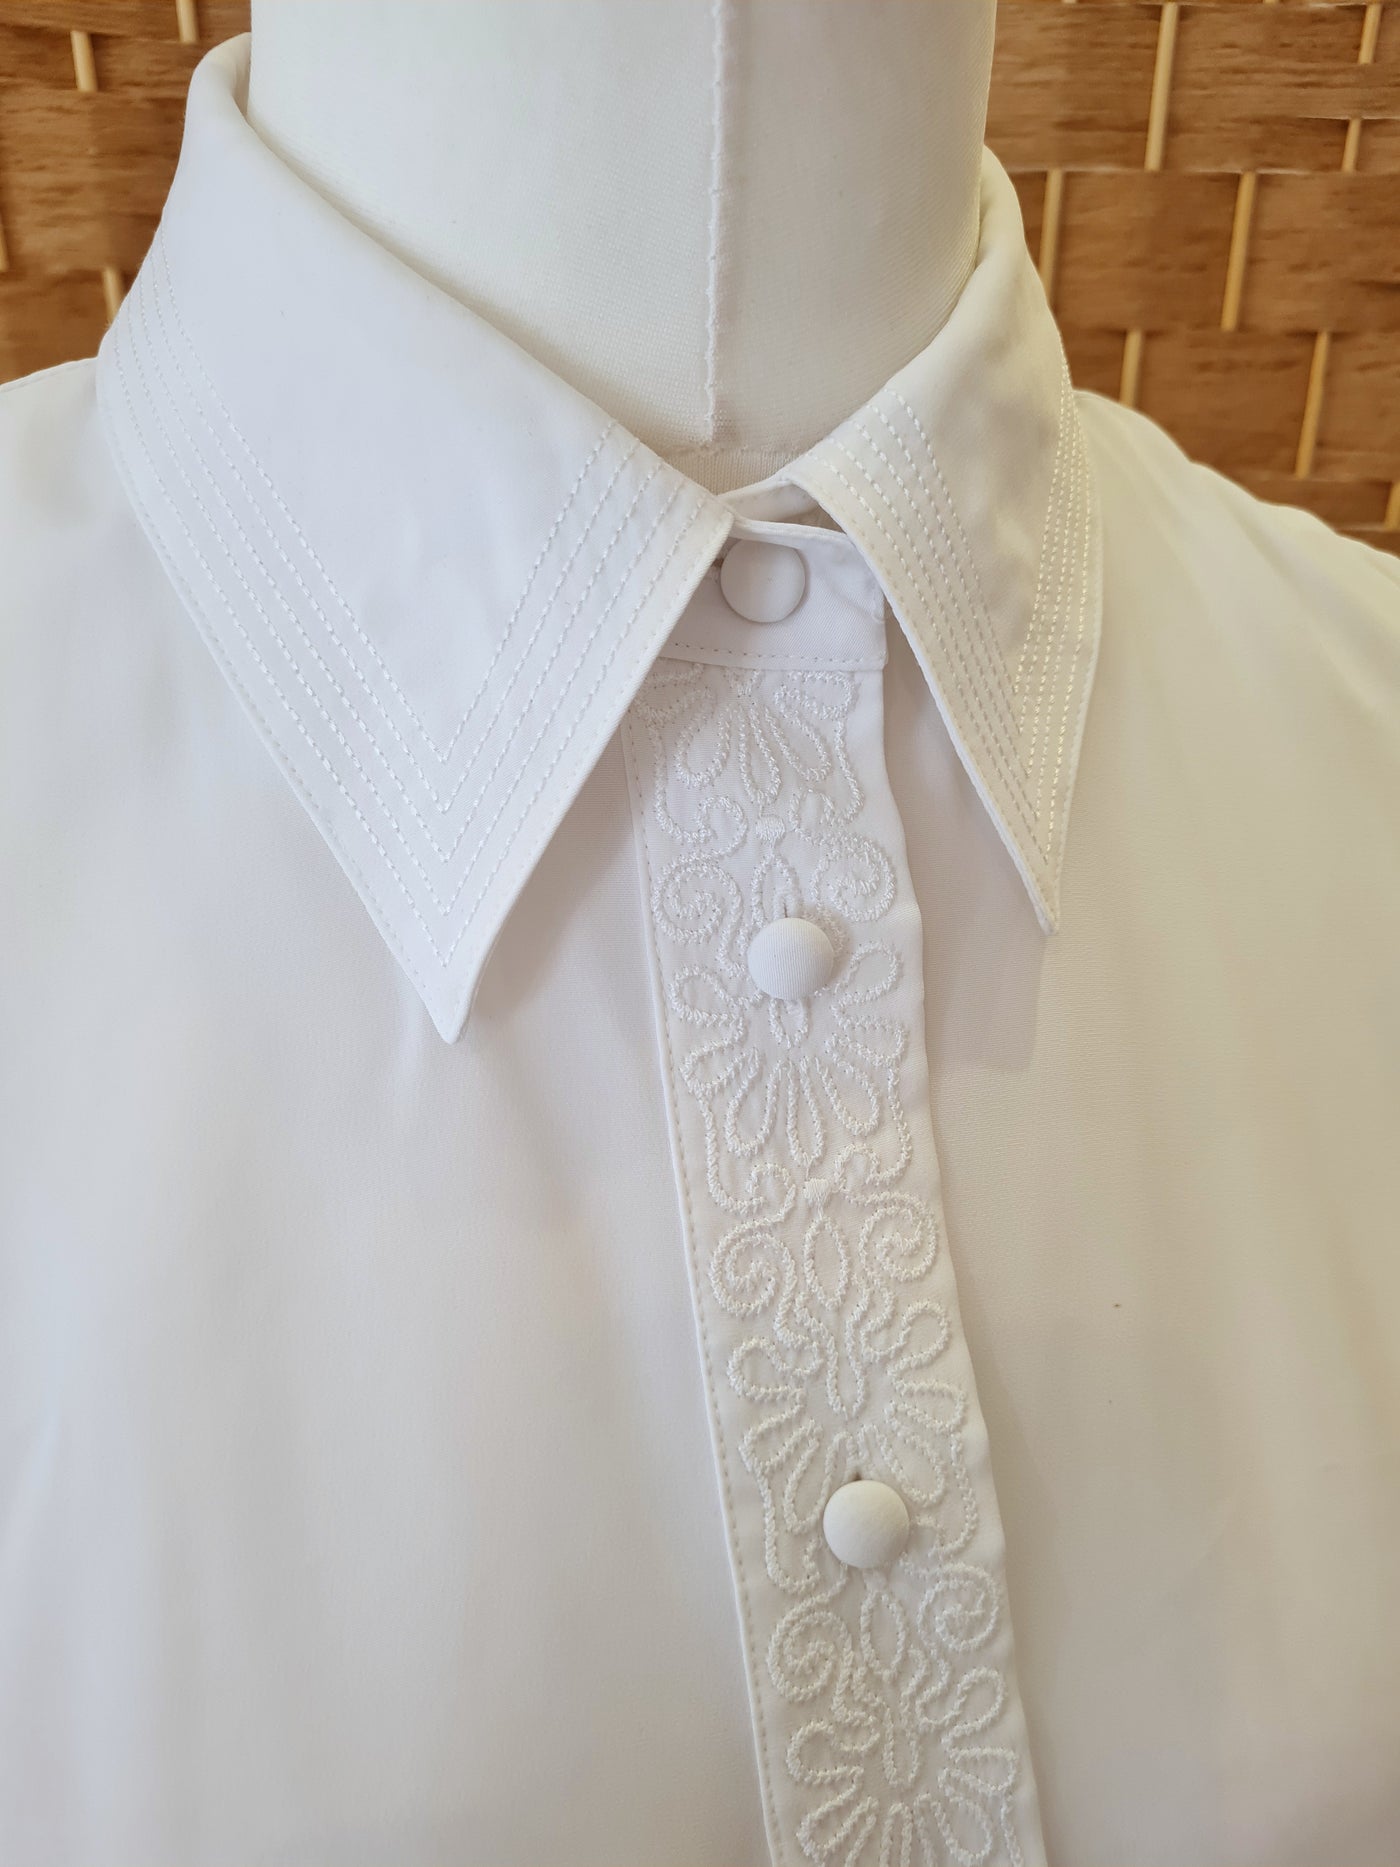 Femenella white shirt 18